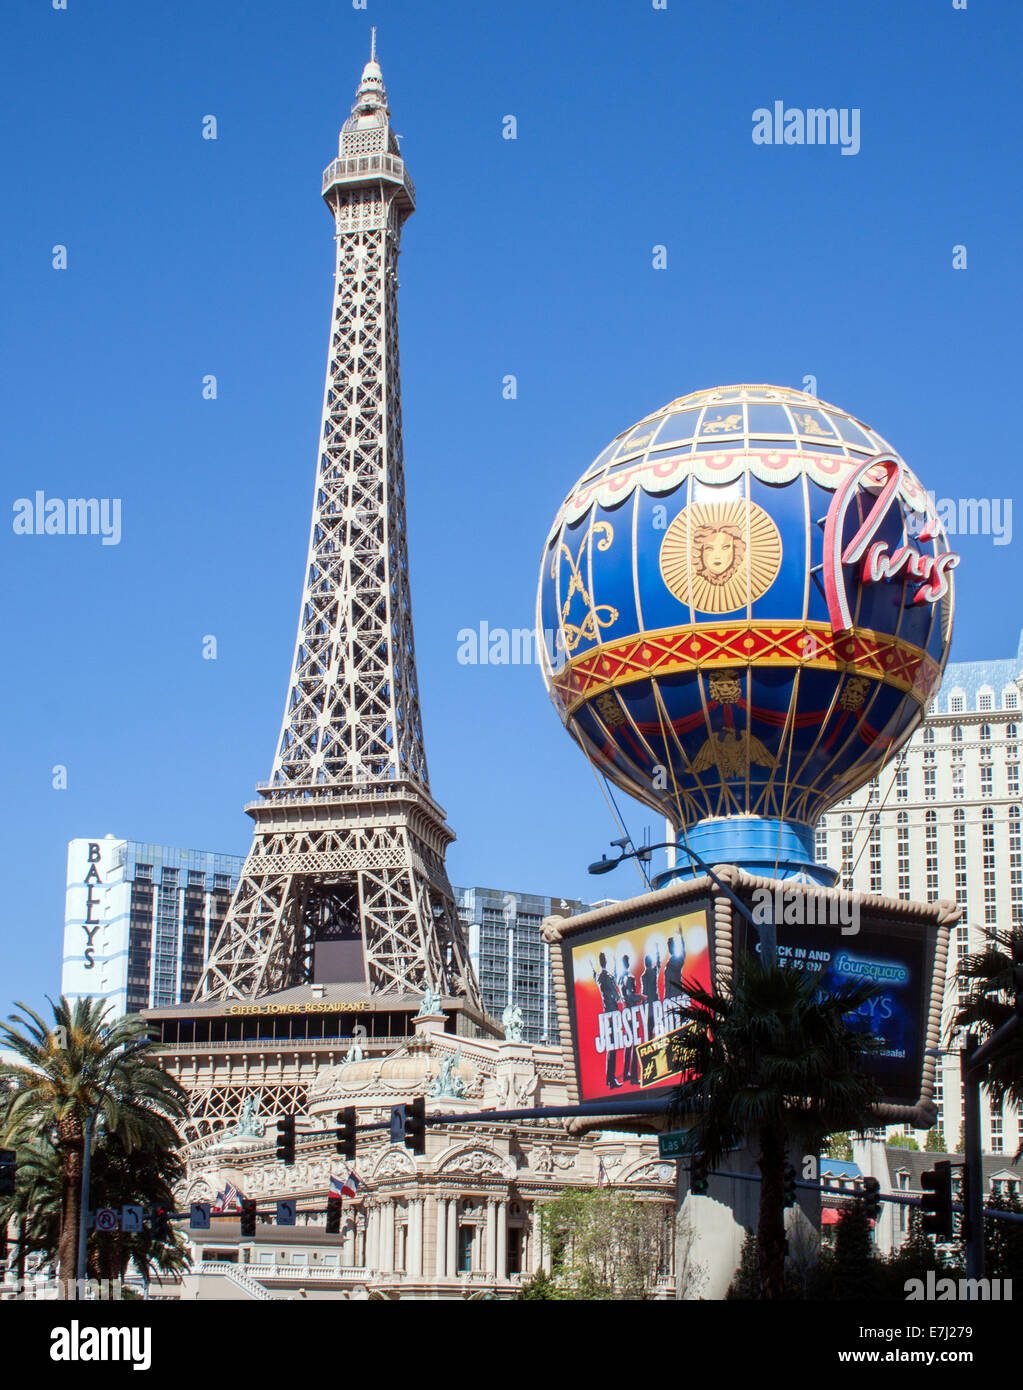 Las Vegas Strip, Eiffel Tower, Paris Hotel Casino, Attractions Editorial  Stock Photo - Image of gambling, nevada: 109560663